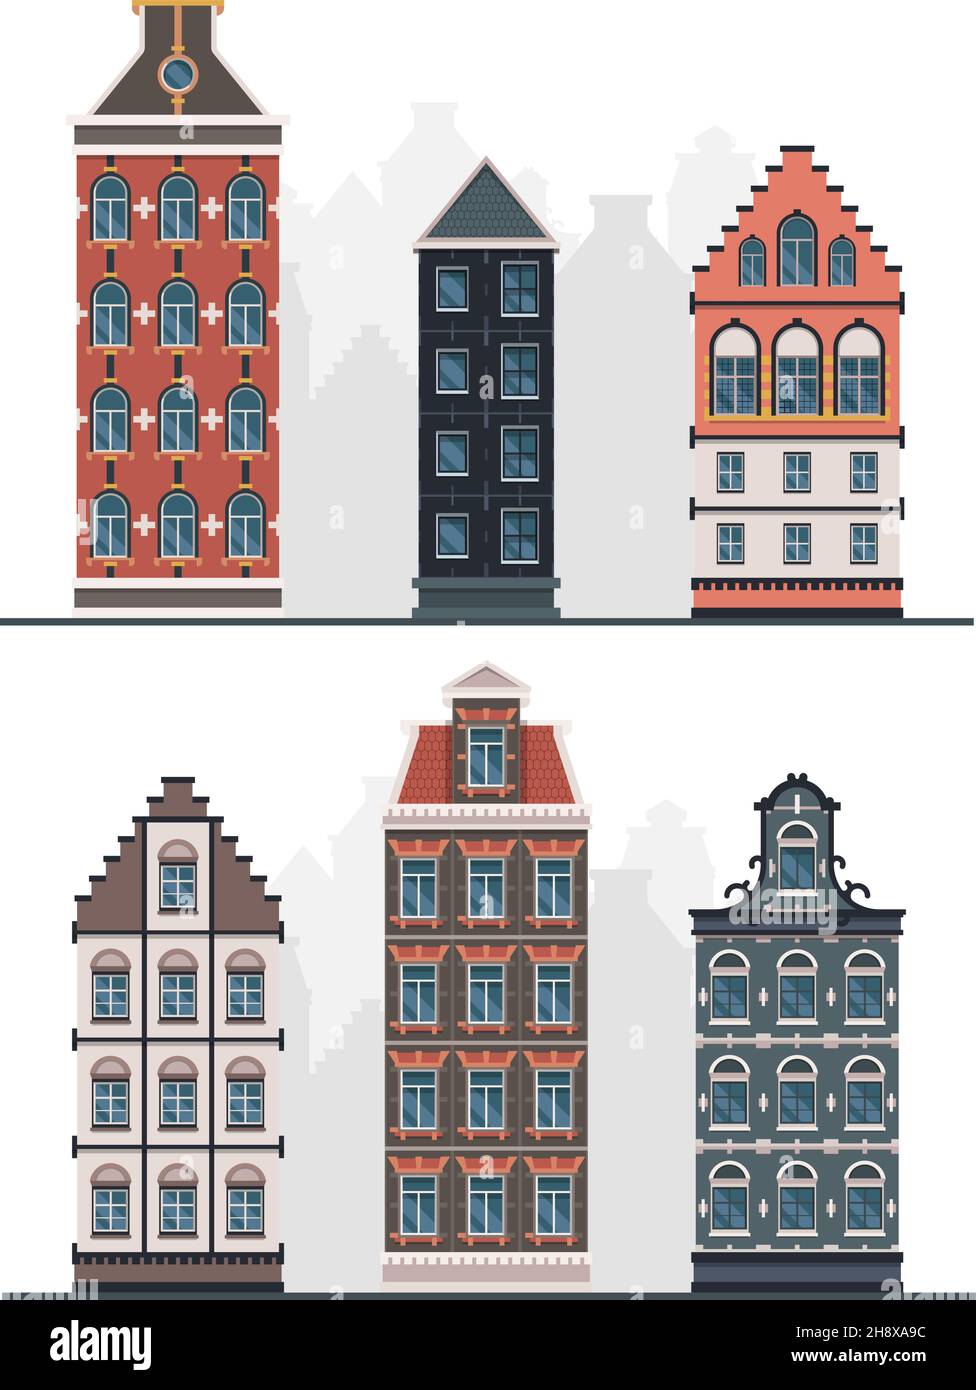 Old buildings. Antique european constructions vintage urban facades in flat style garish vector exterior designs Stock Vector